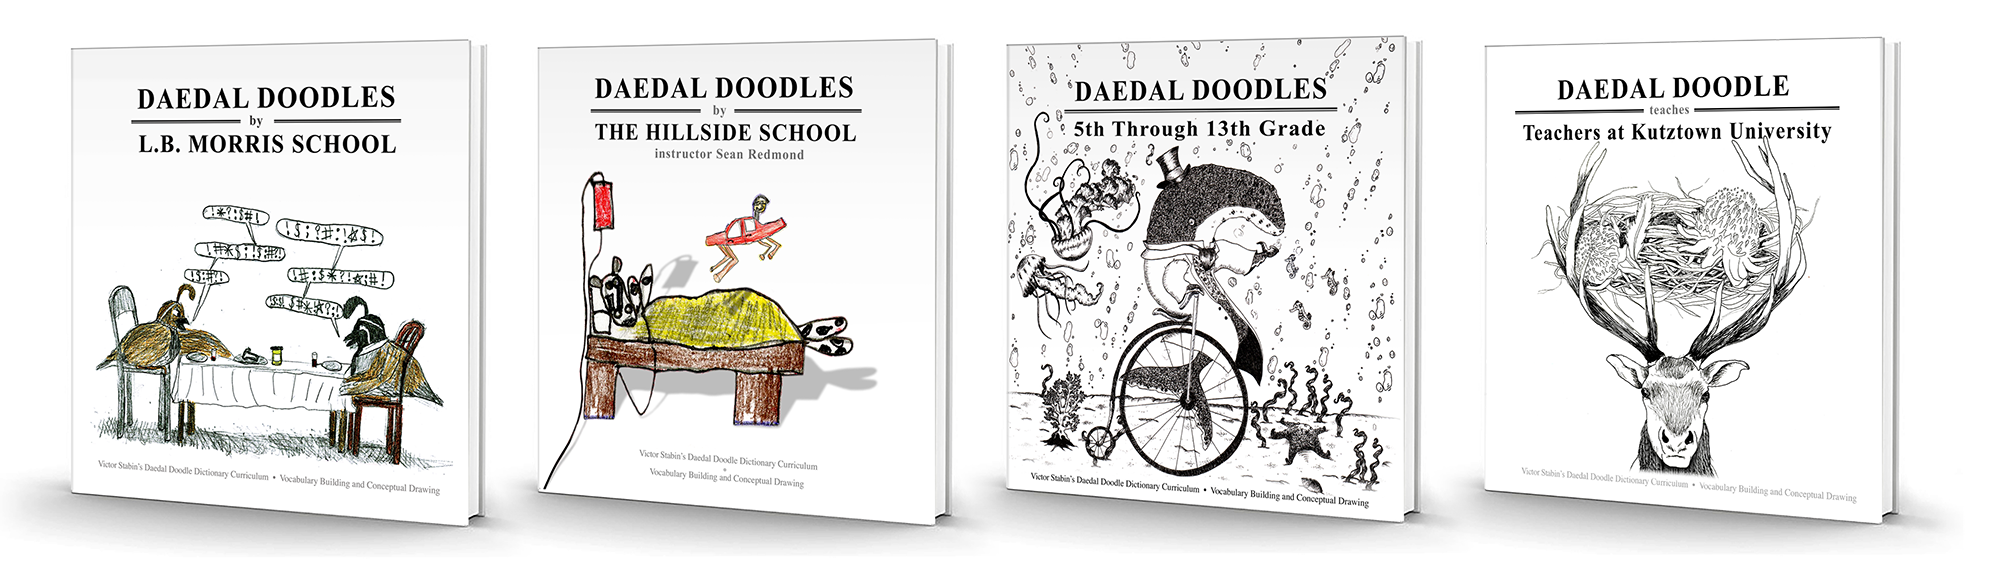 Daedal Doodle: Students' Work